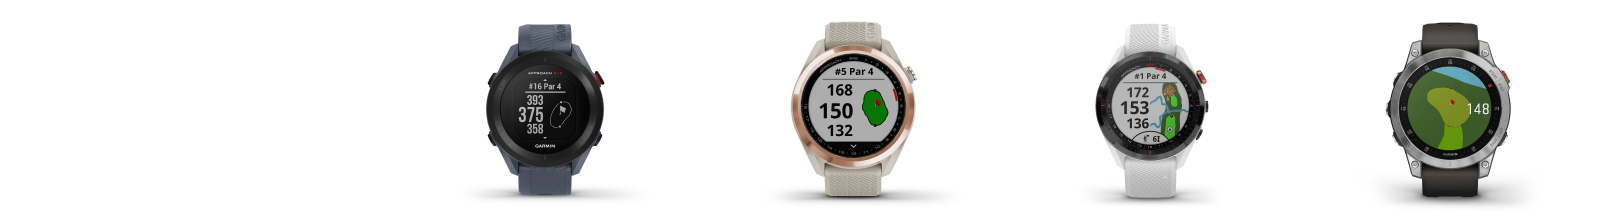 Golf Watch Comparison | Garmin